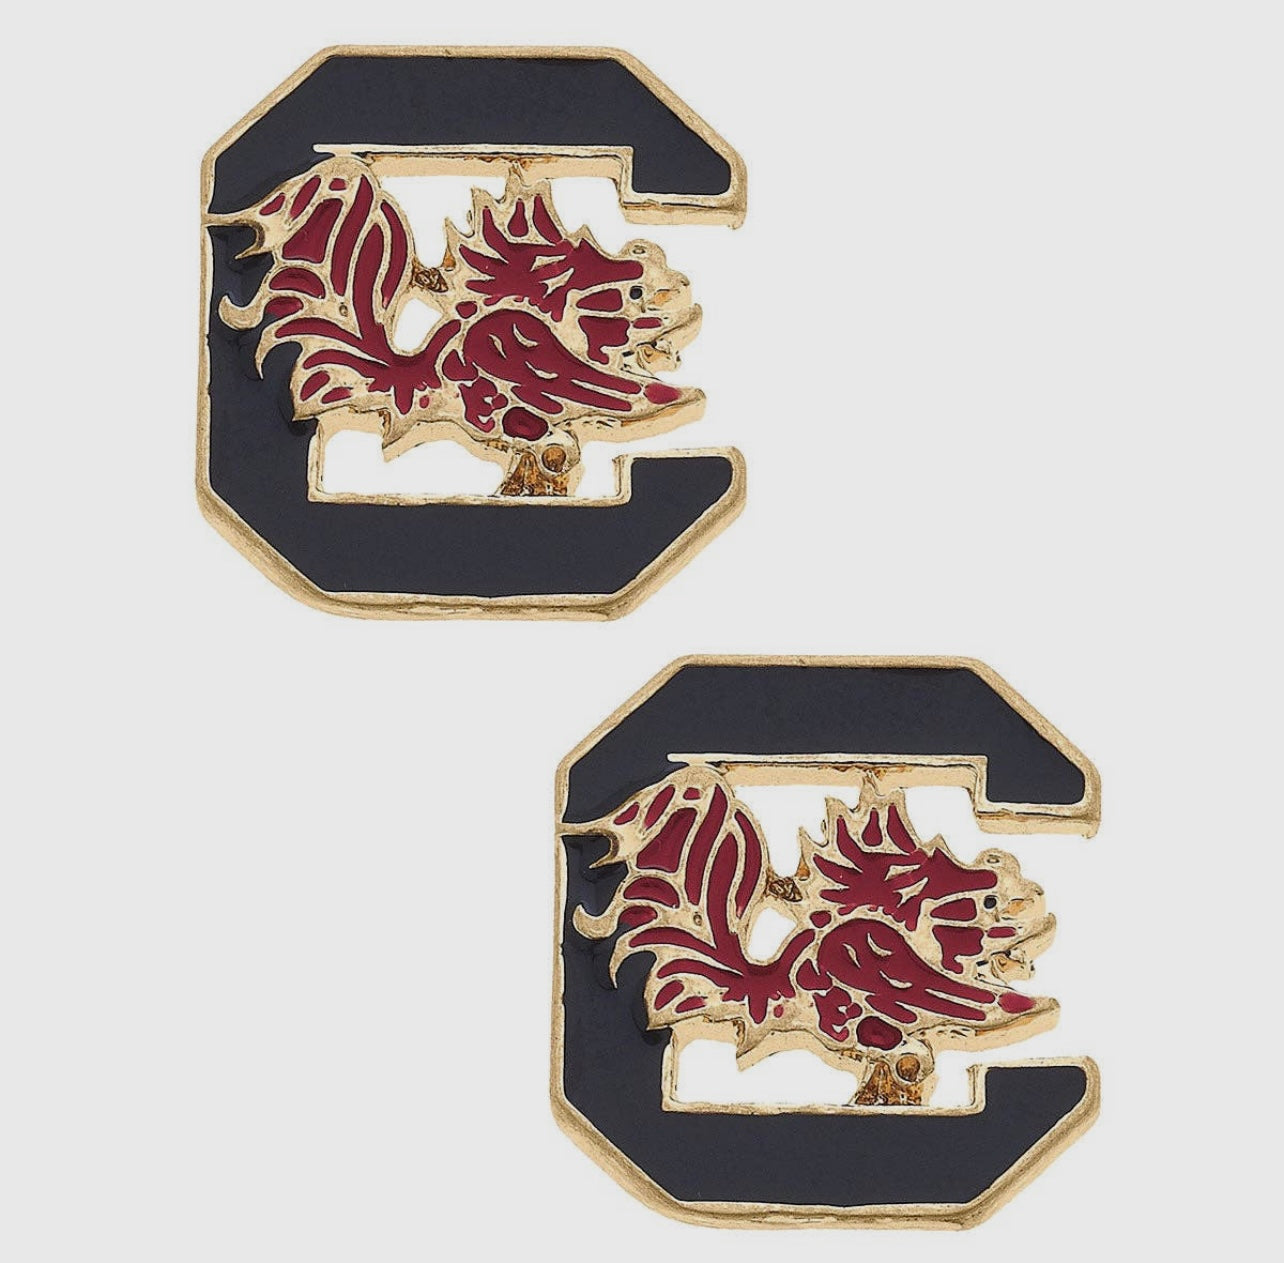 Enamel Collegiate Stud Earrings featuring gamecock logo in garnet & black for the University of South Carolina.